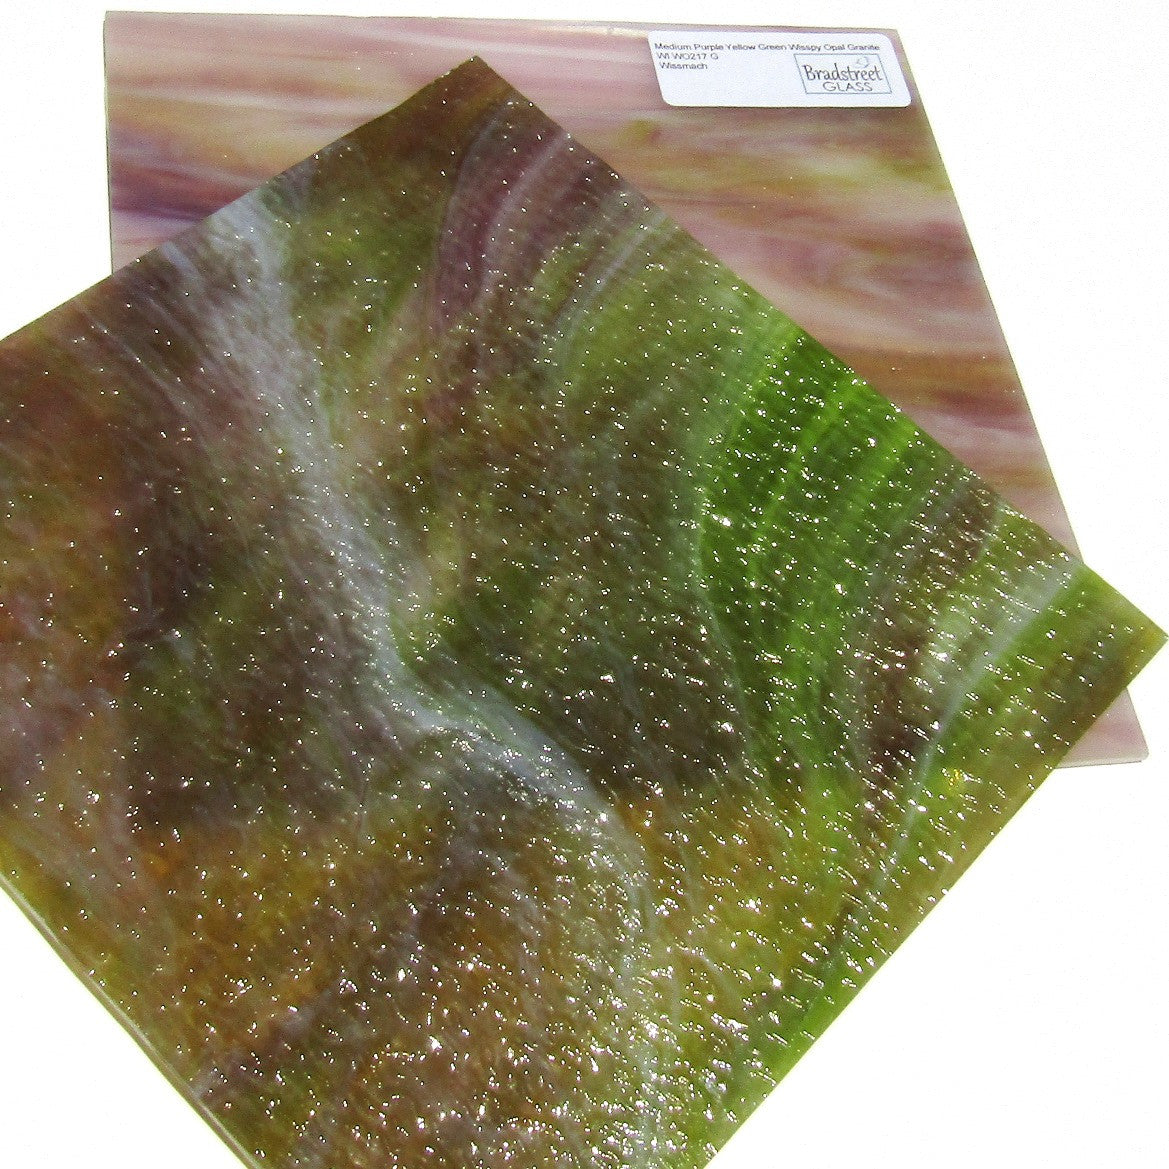 Medium Purple Yellow Green Wisspy Opal Granite Wissmach WO217 G Stained Glass Sheet